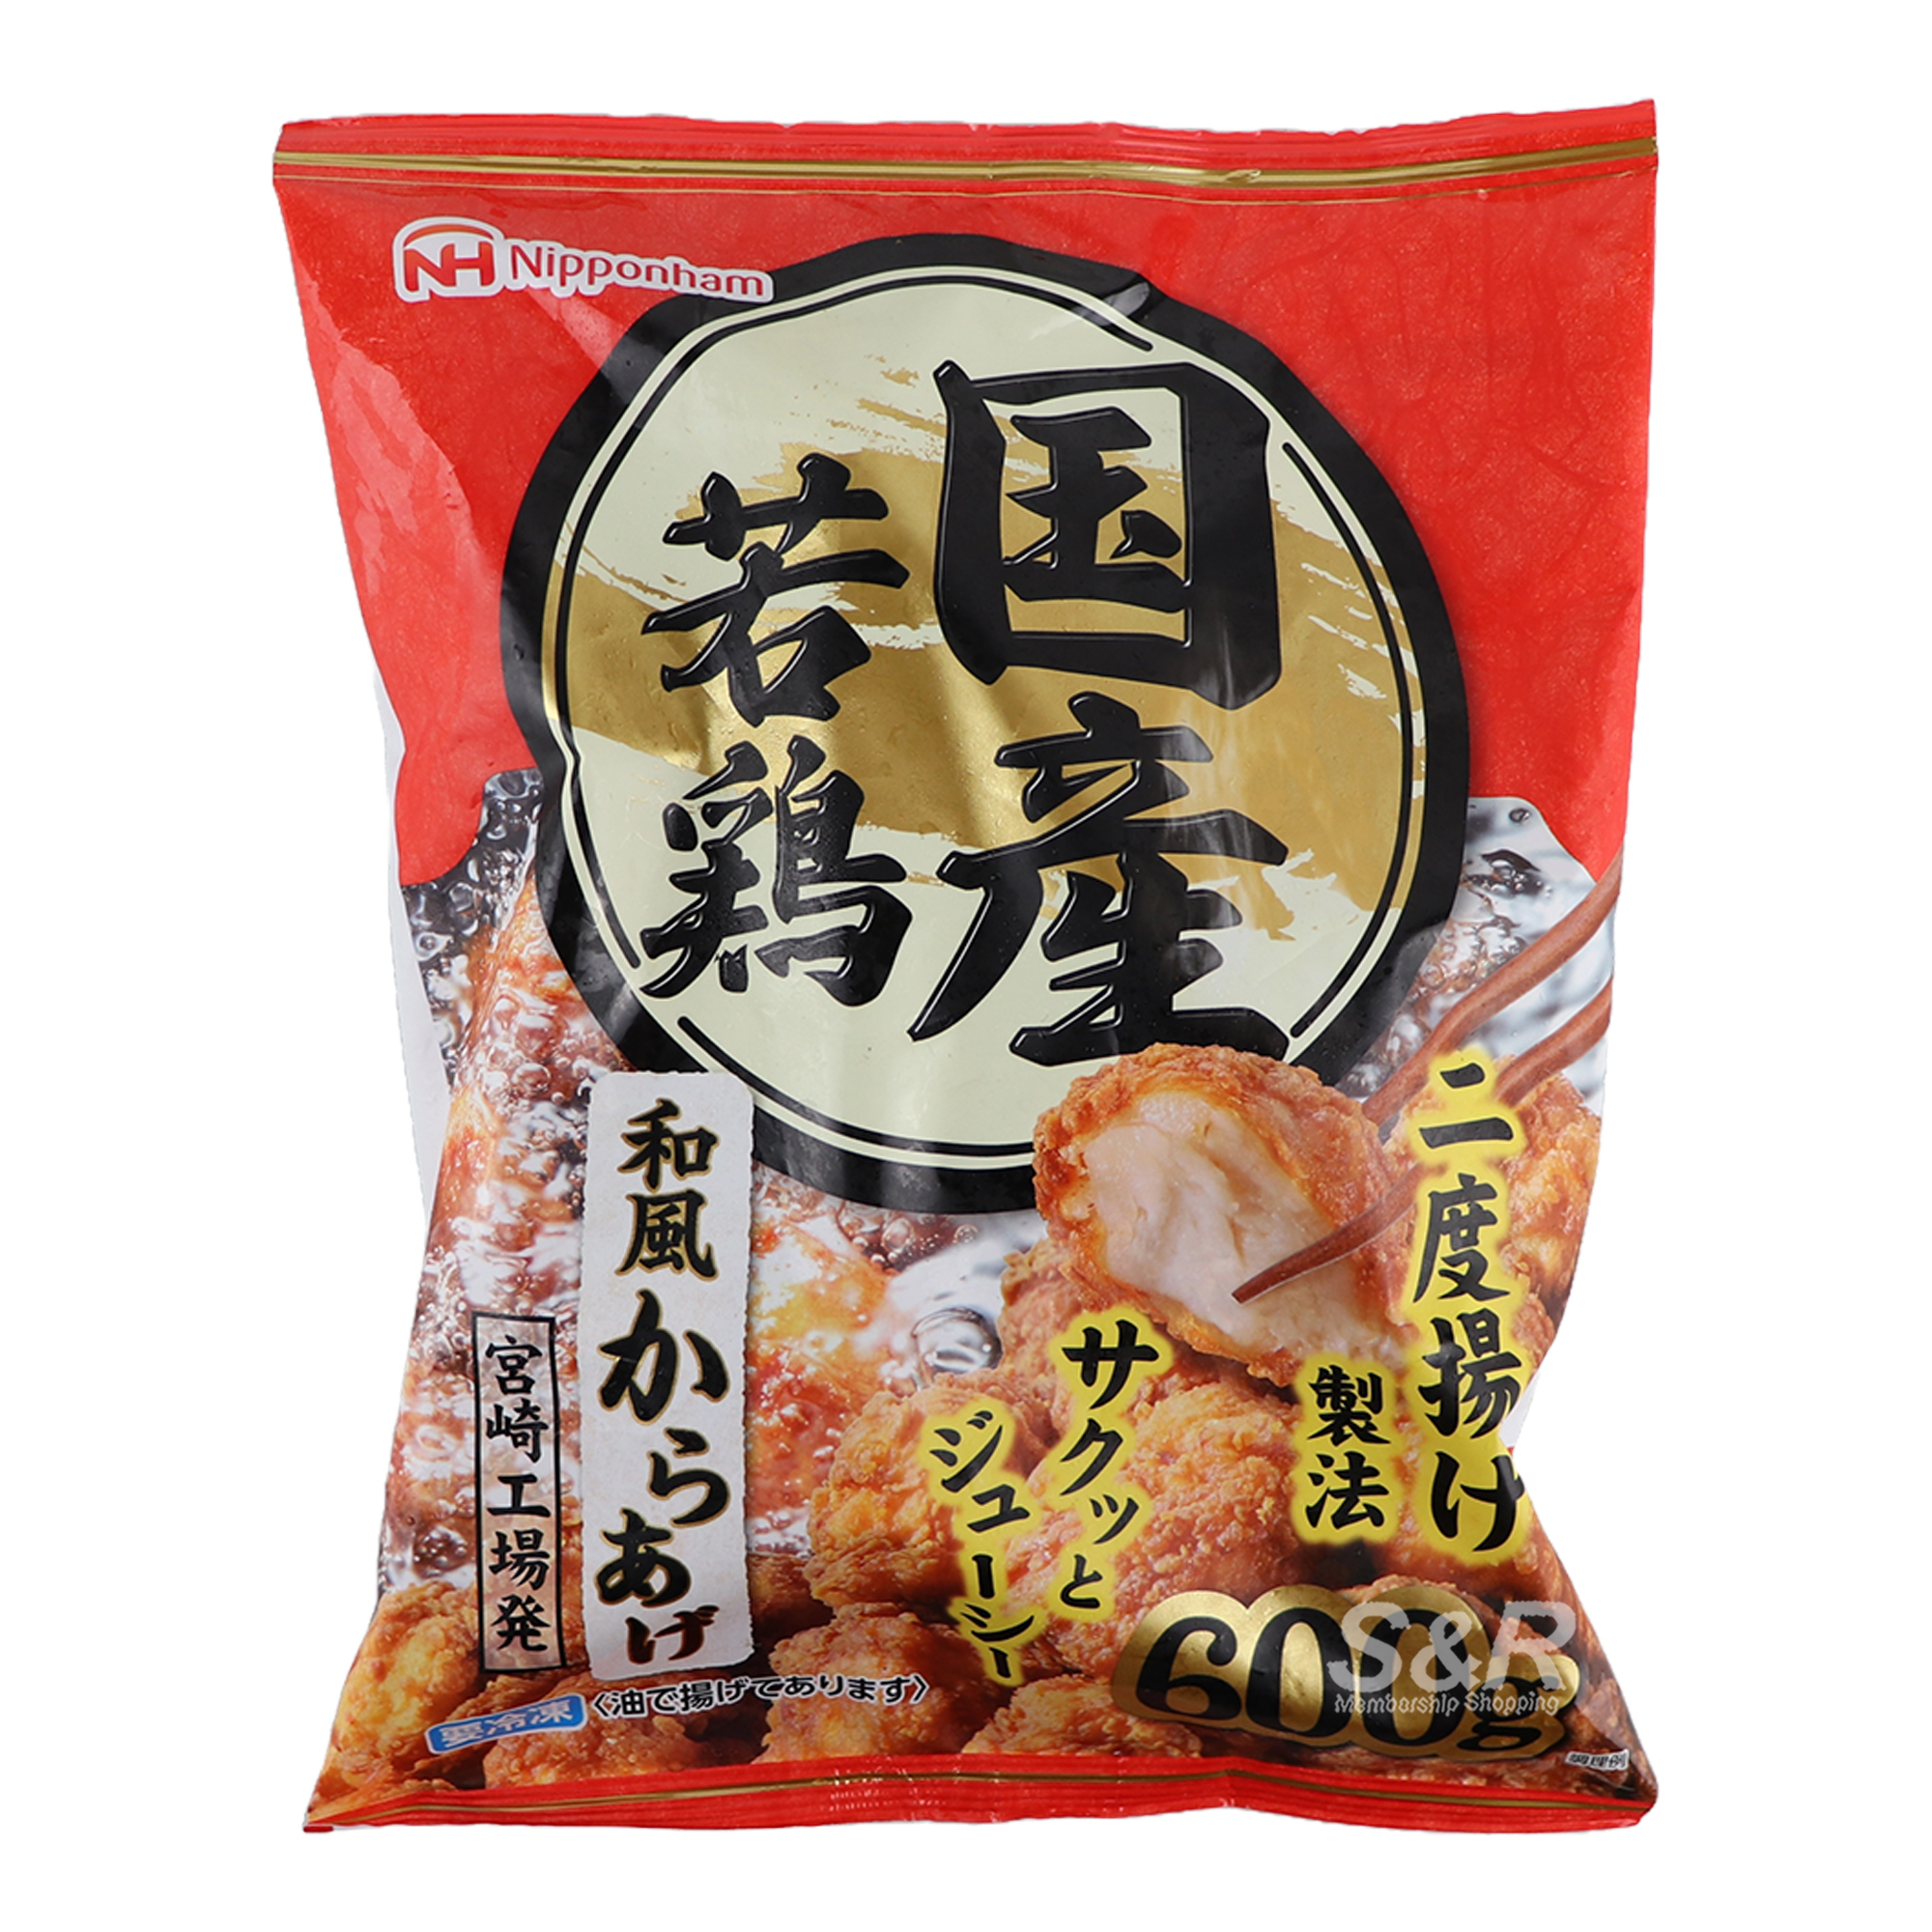 Nipponham Japanese Style Karaage Fried Chicken Thigh 600g